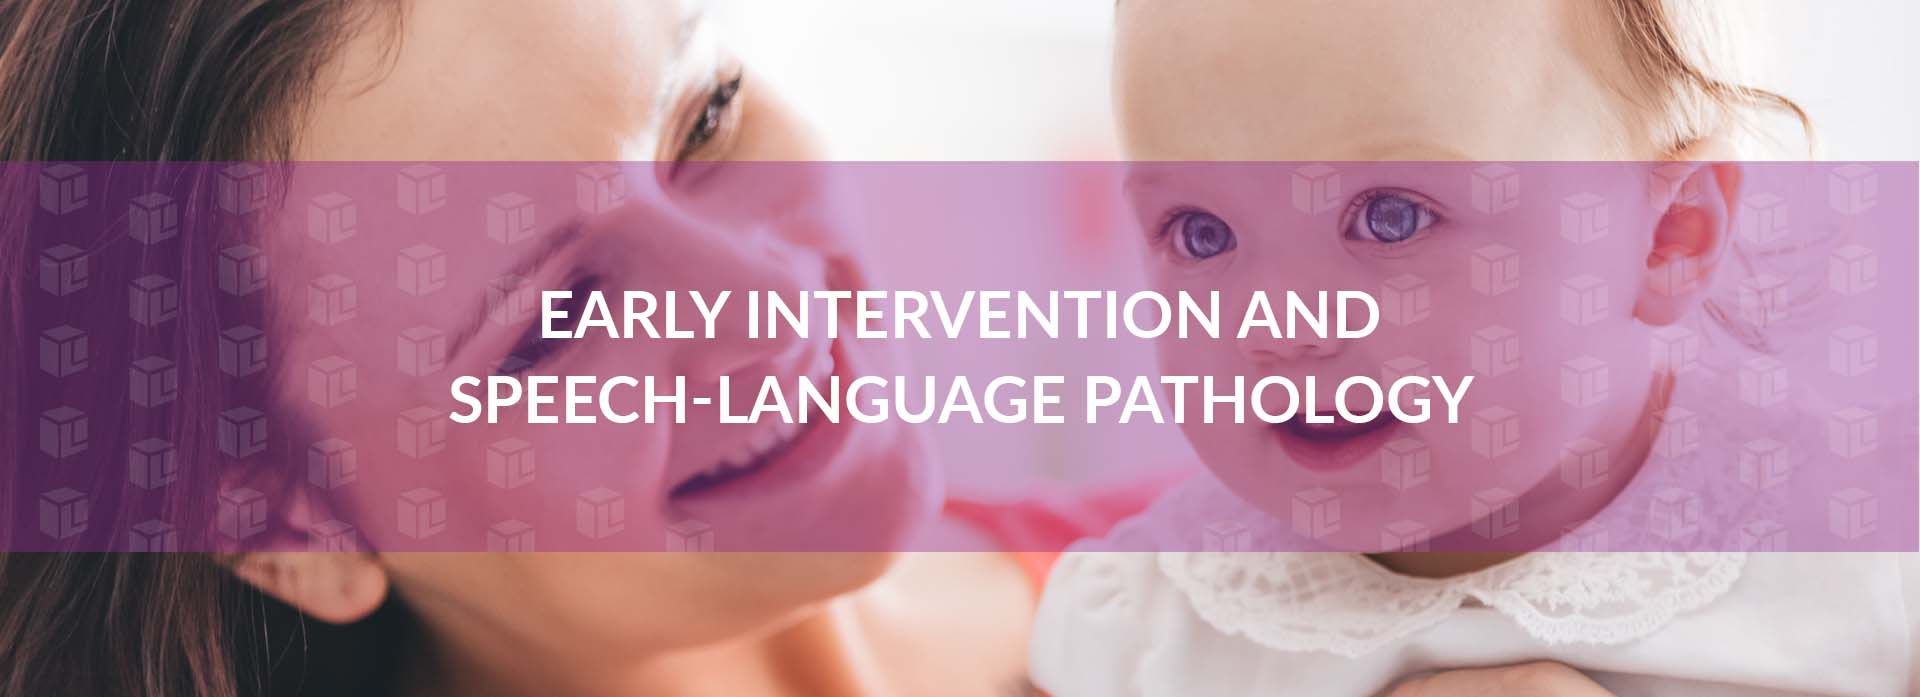 Speech-Language Pathology Early Intervention Speech-Language Pathology Early Intervention Speech-Language Pathology Early Intervention Speech-Language Pathology Early Intervention